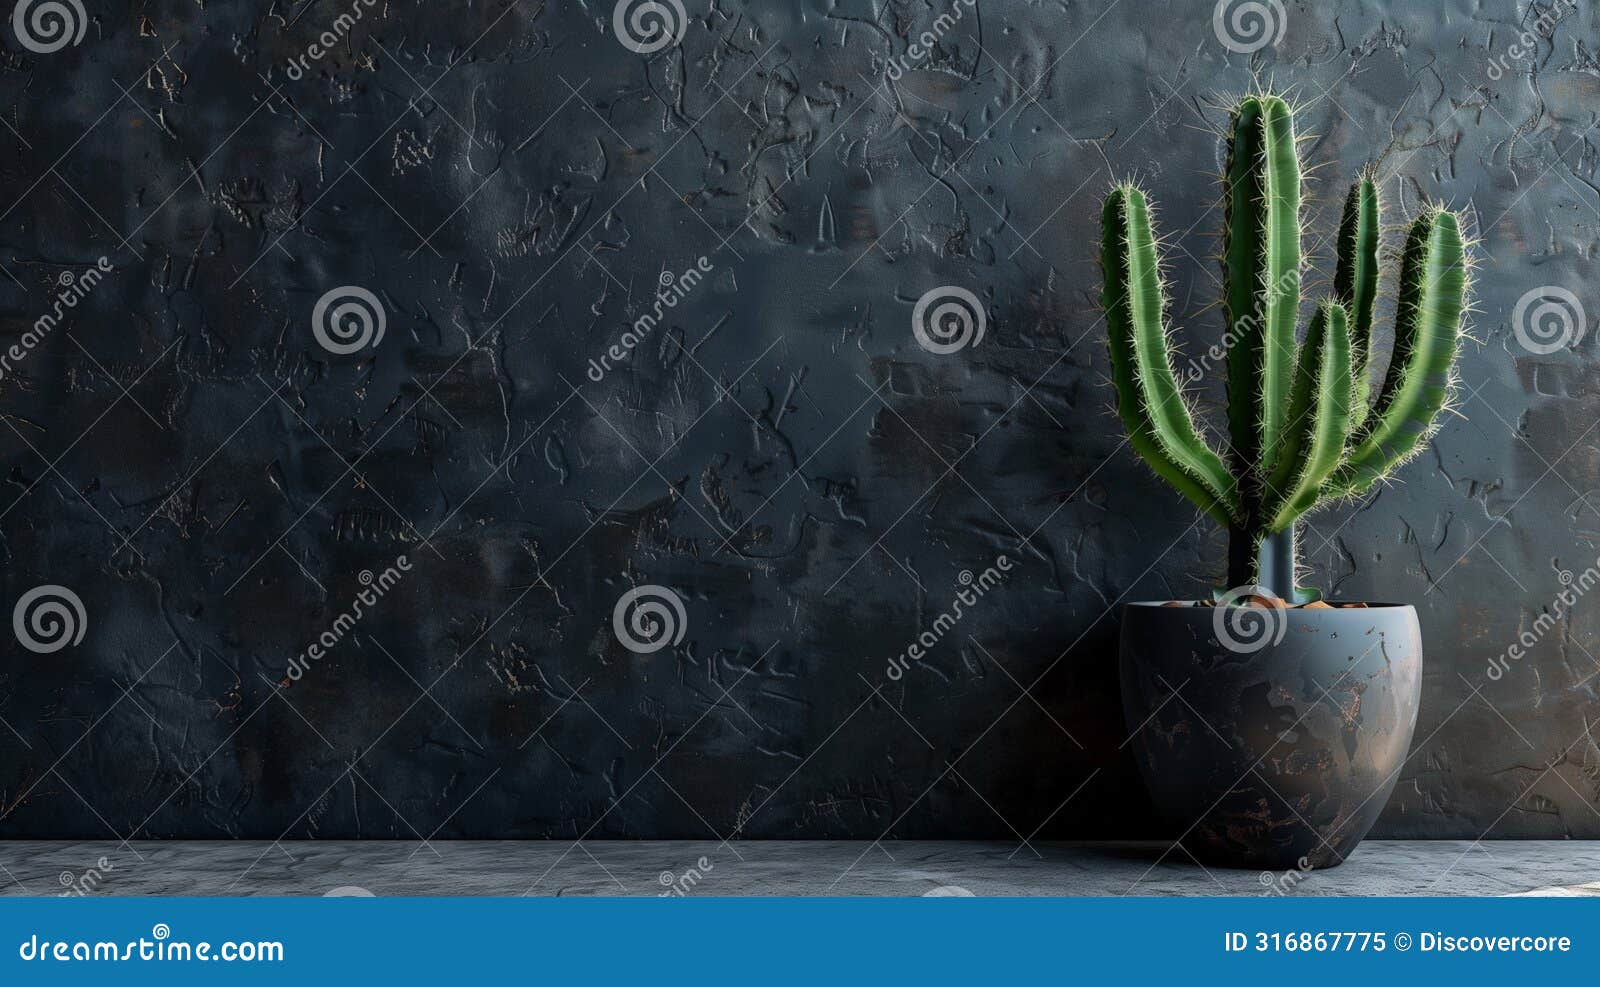 elegant green cactus in dark textured planter on moody background